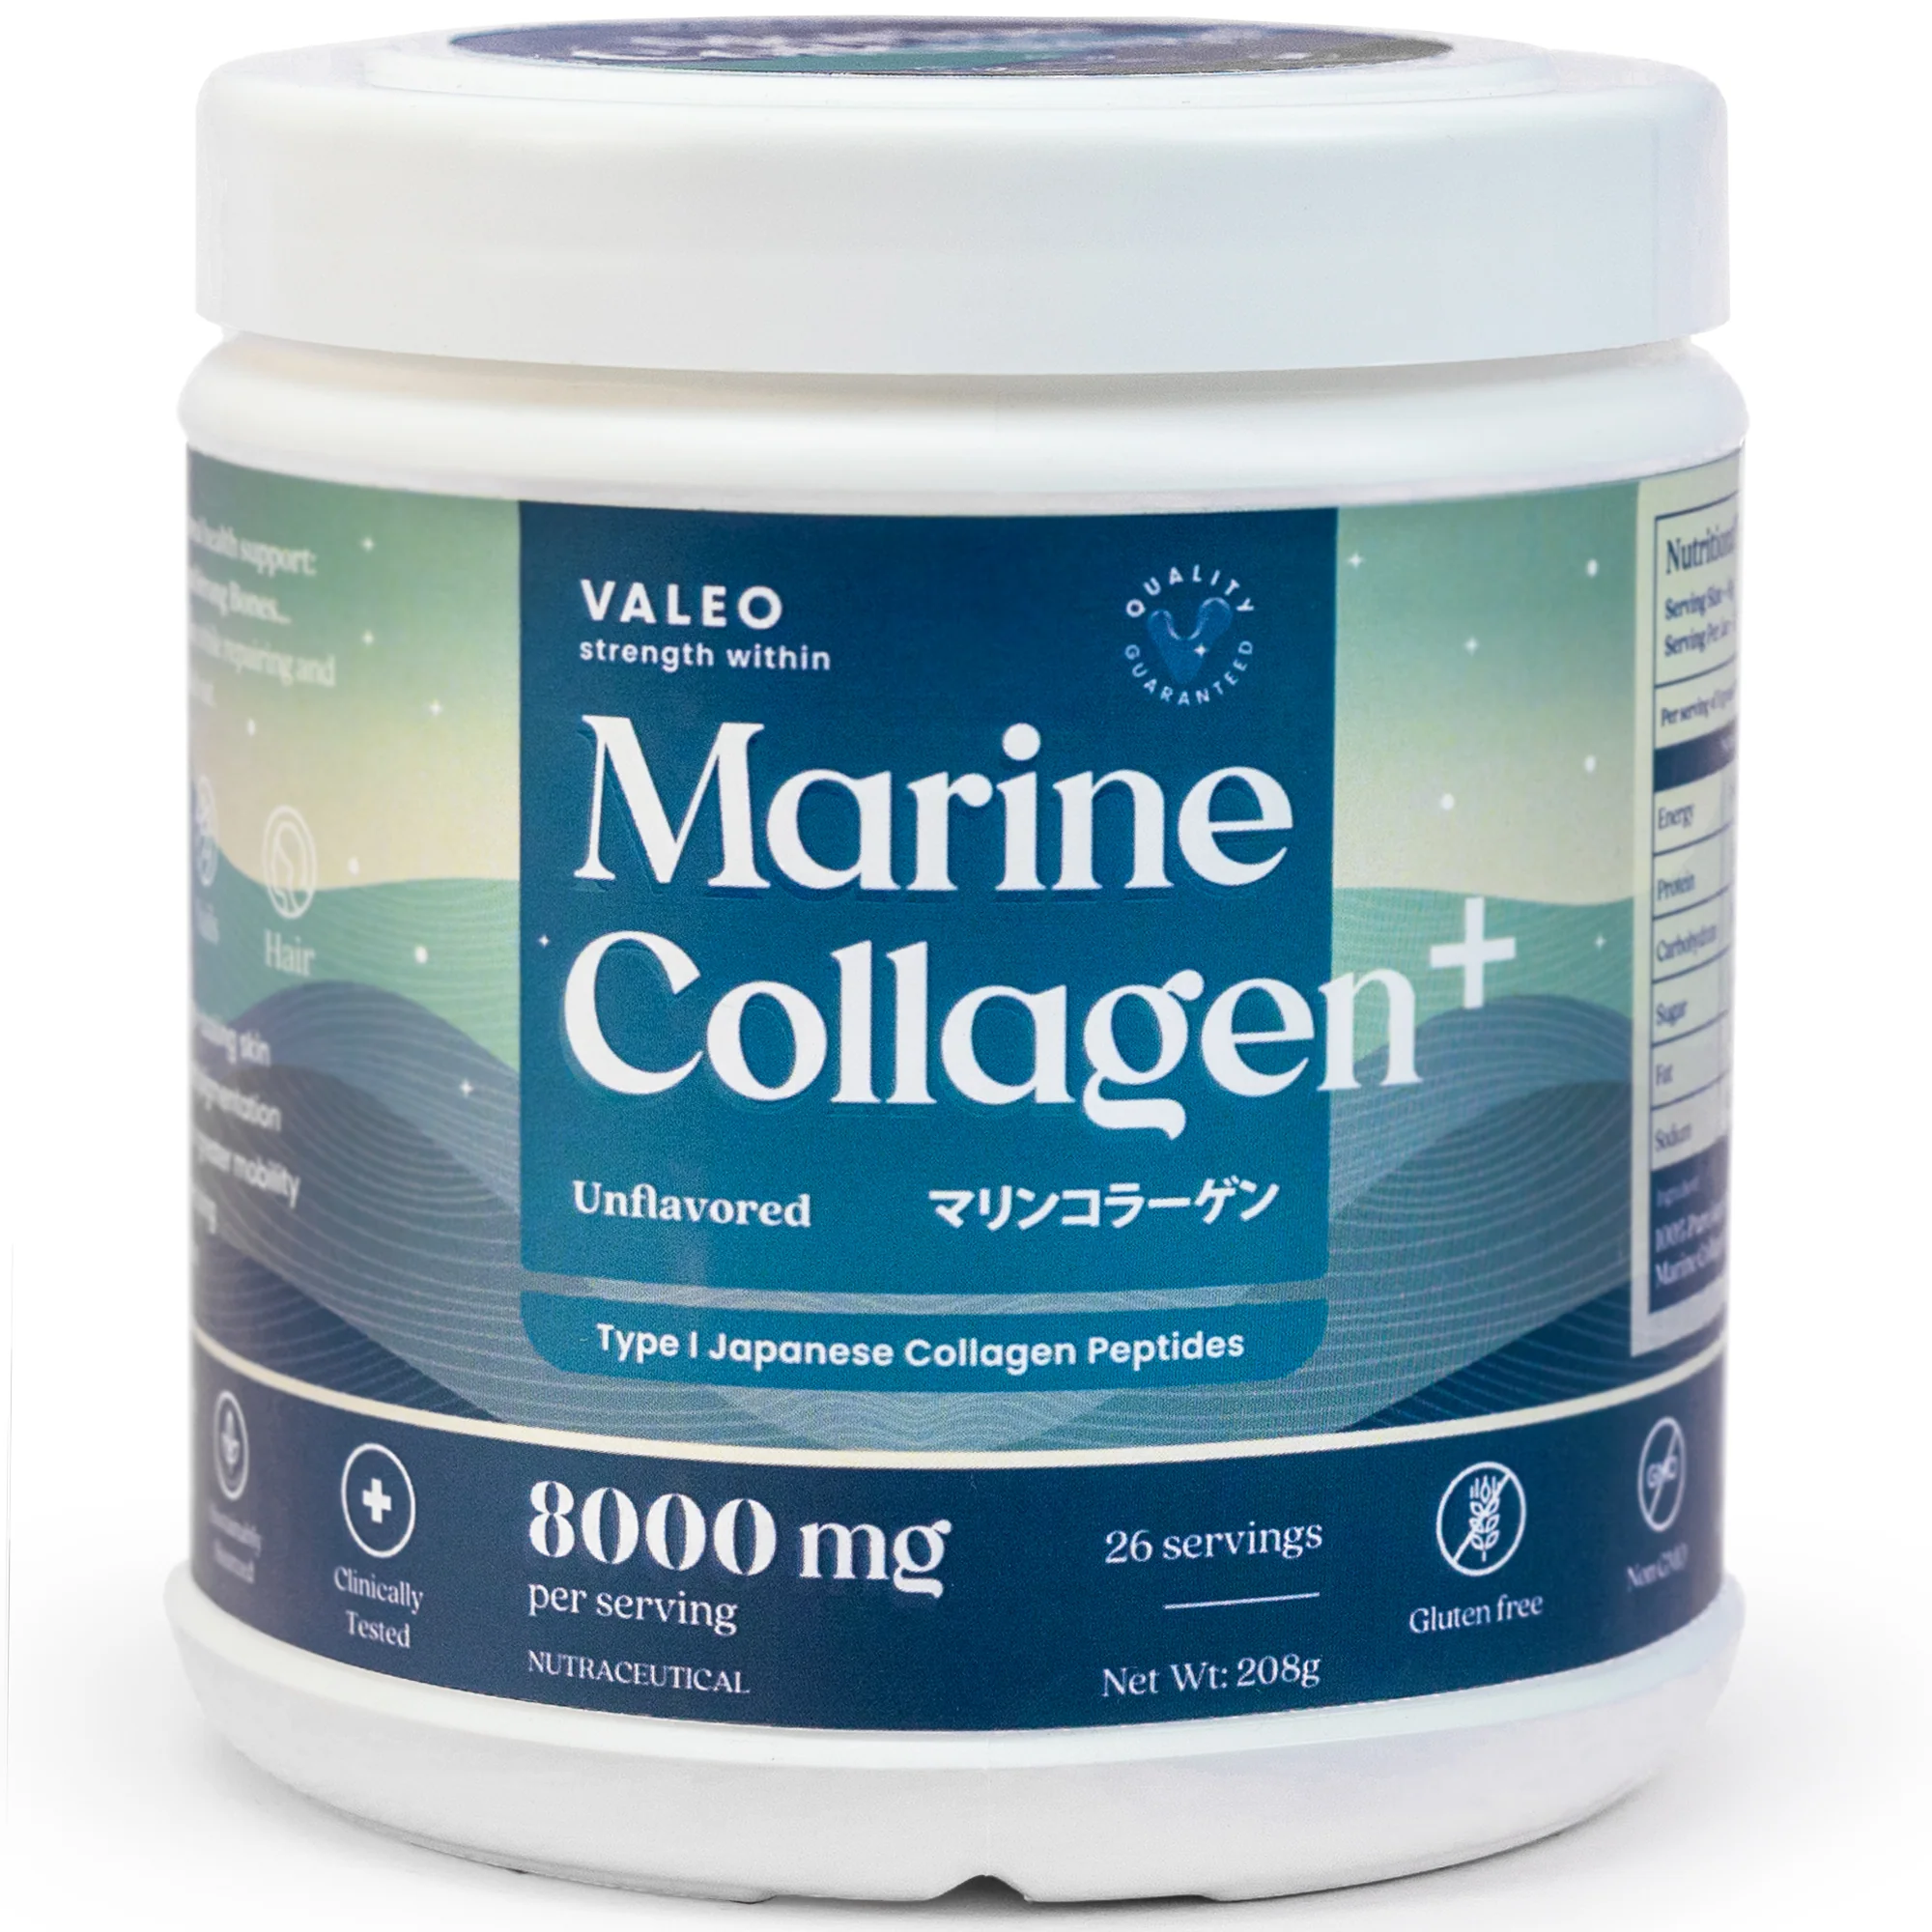 Neocell Super Collagen and Valeo Marine Collagen (Buy 1 Get 1)Neocell Collagen Expiry 31st Jan 2024